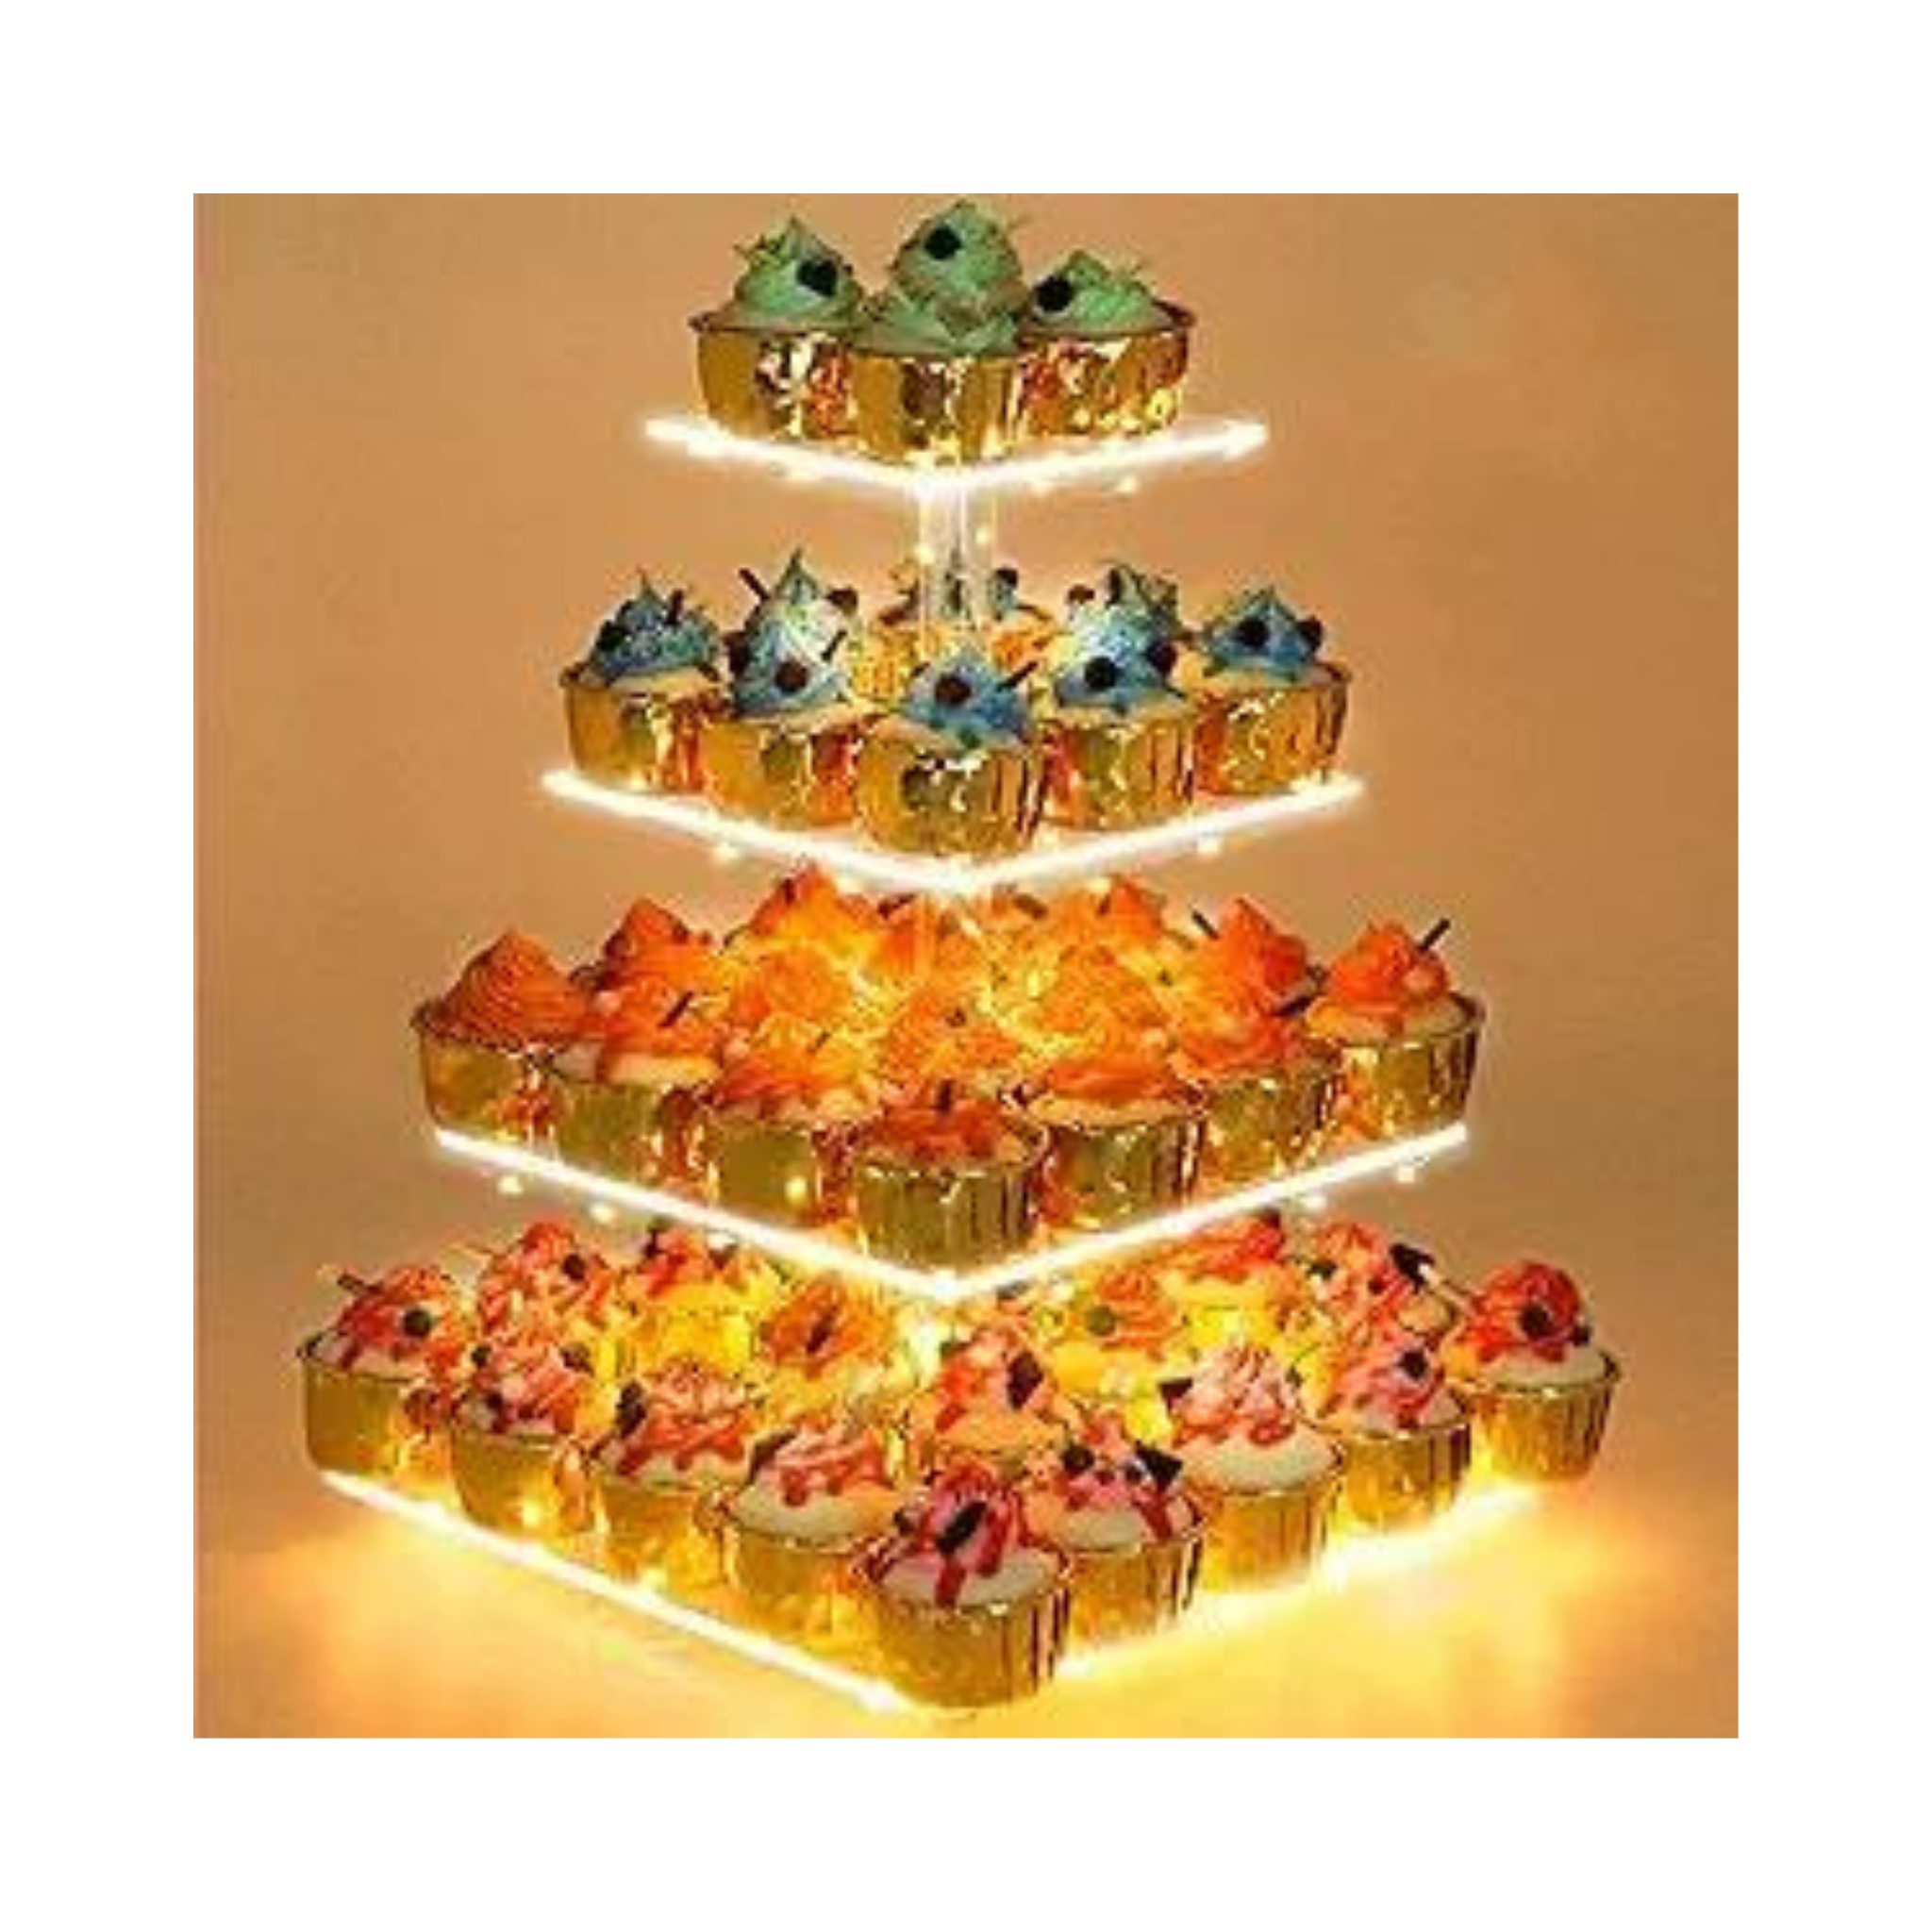 4 Tier Cupcake Stand Acrylic Display w/ LED Lights